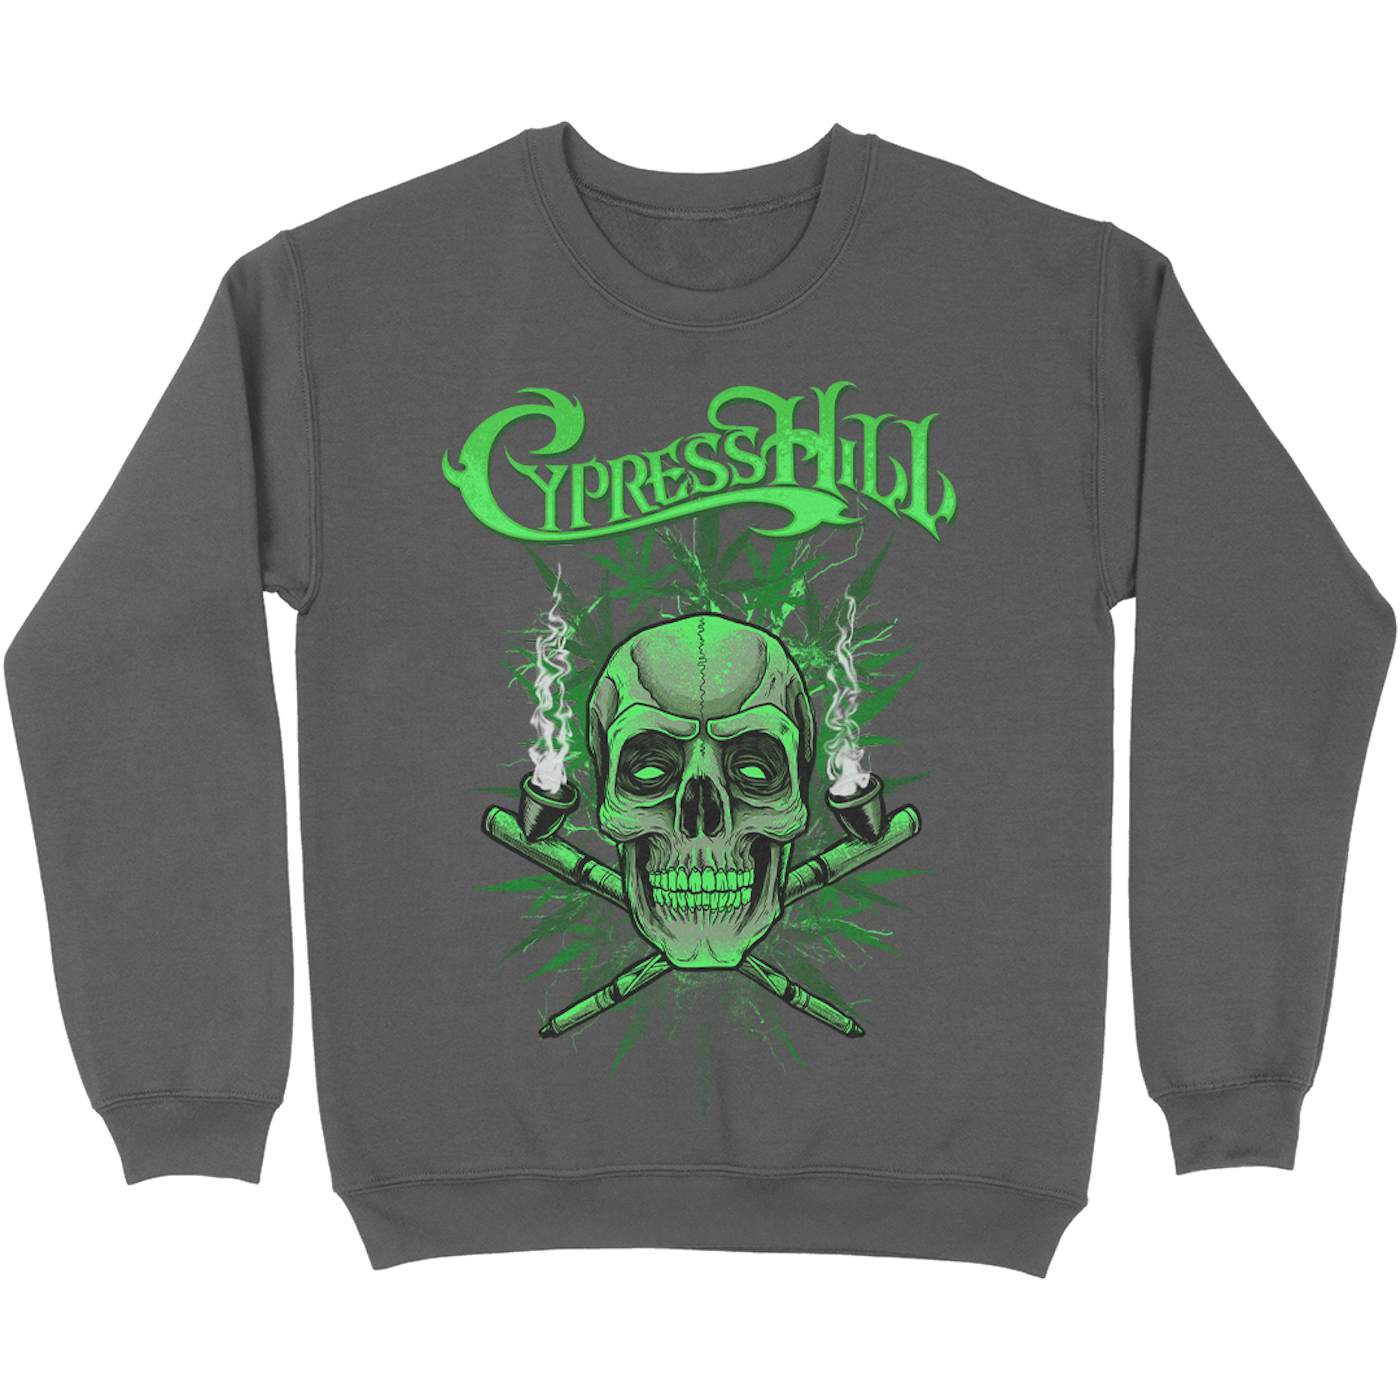 Cypress Hill "420" Sweatshirt in Charcoal Gray